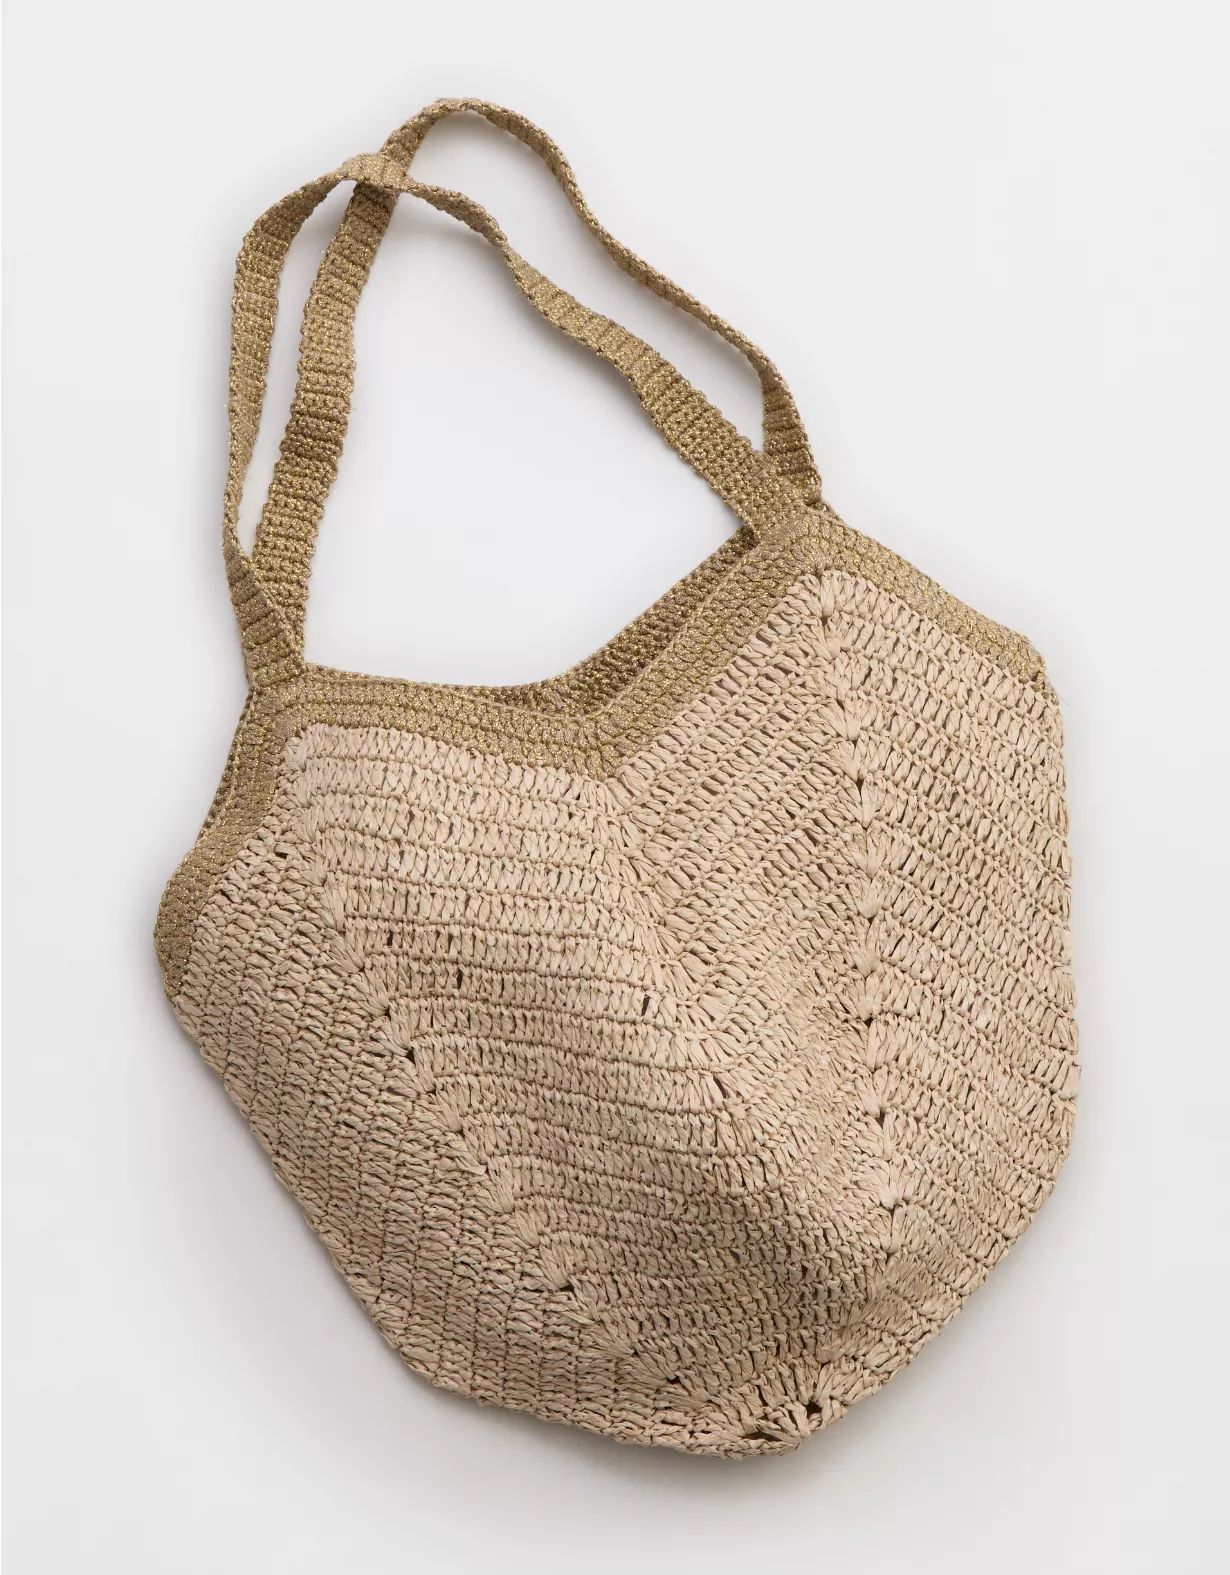 Aerie Crochet Metallic Tote Bag | Aerie